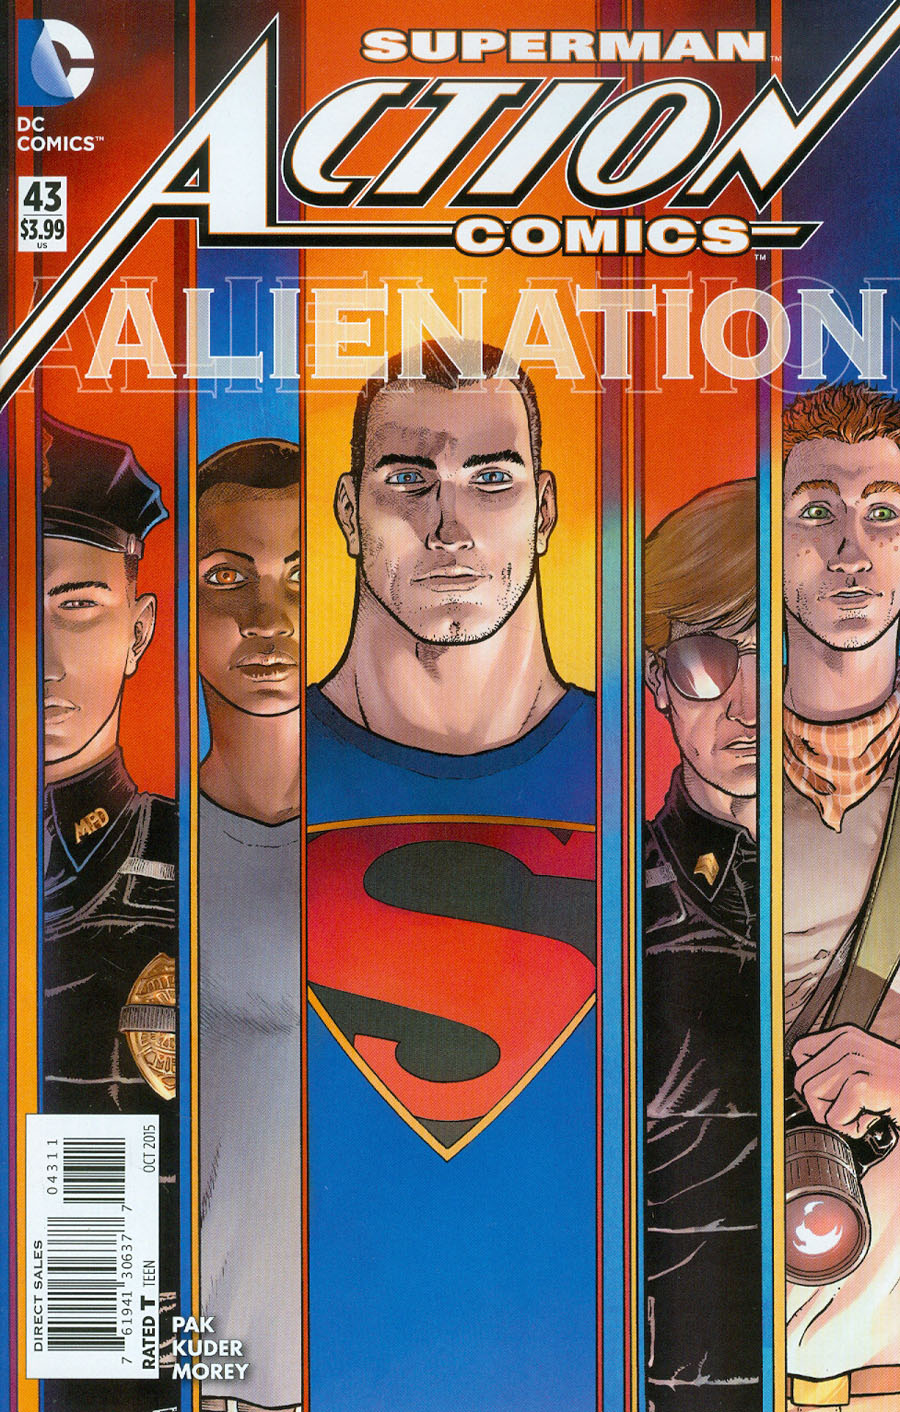 Action Comics Vol 2 #43 Cover A Regular Aaron Kuder Cover